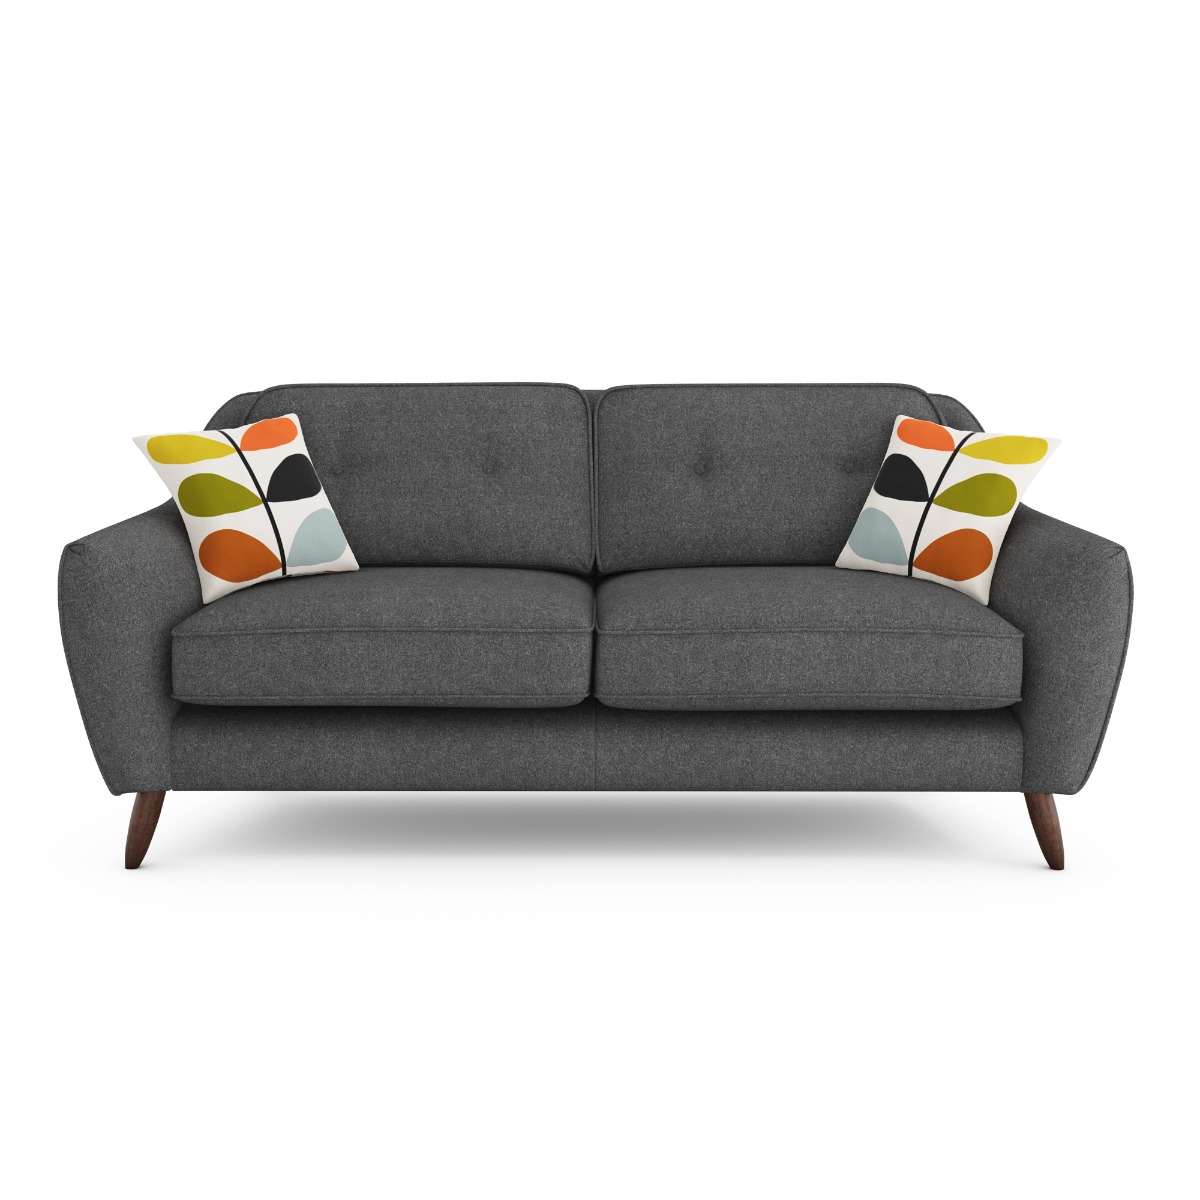 Orla Kiely Laurel Large Sofa, Grey Fabric | Barker & Stonehouse